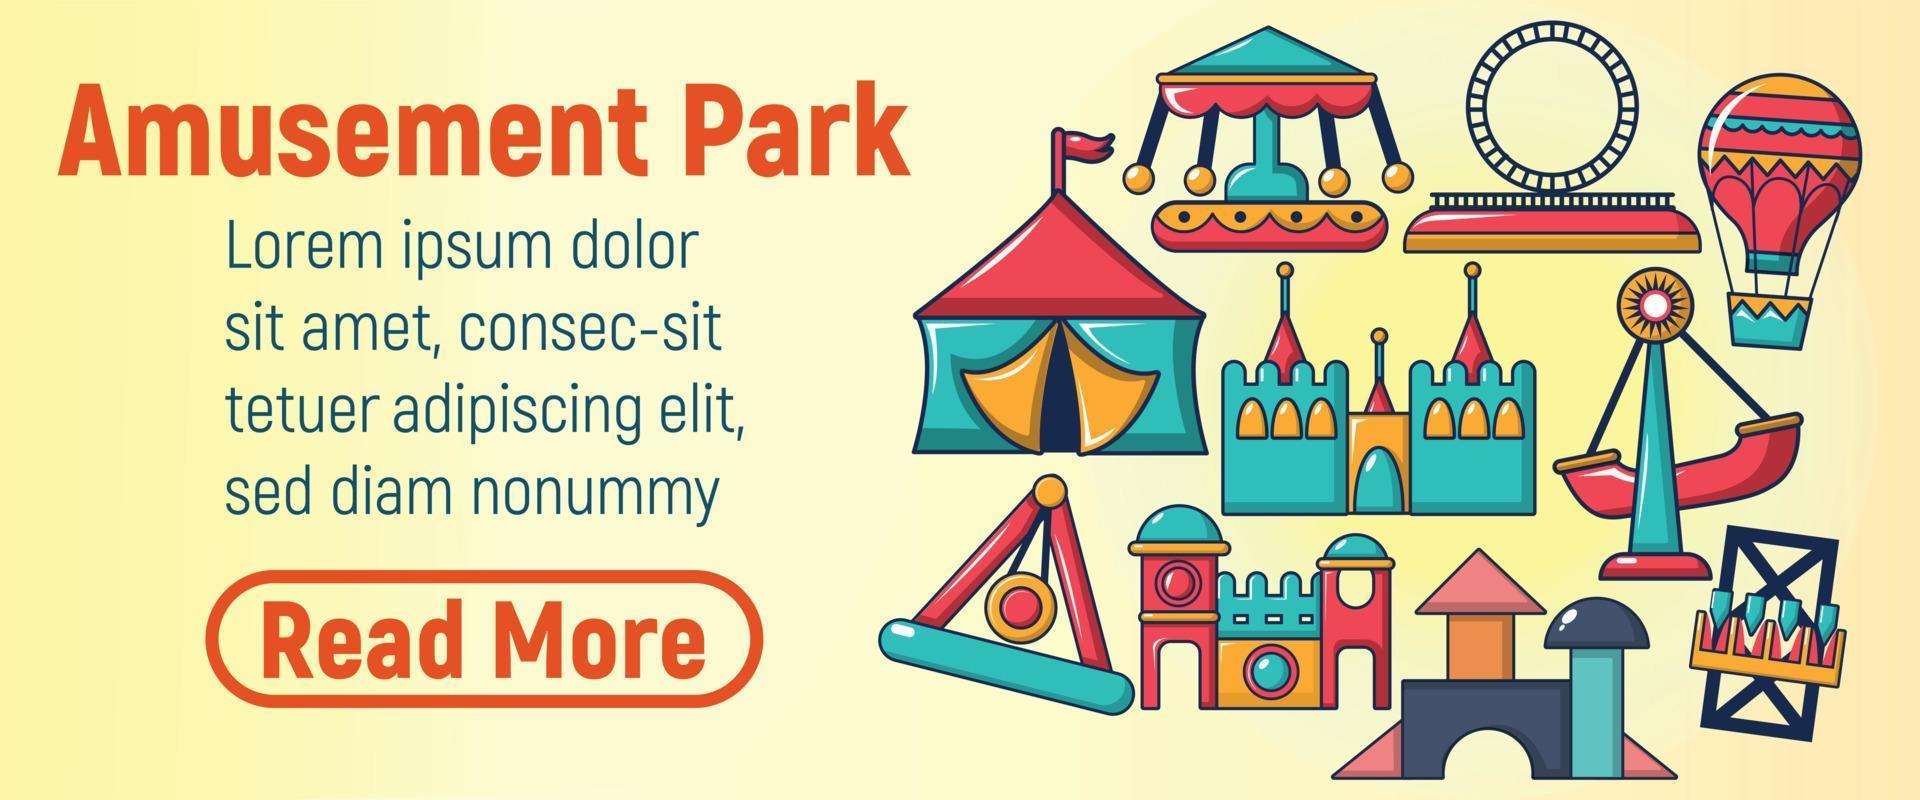 Amusement park concept banner, cartoon style vector